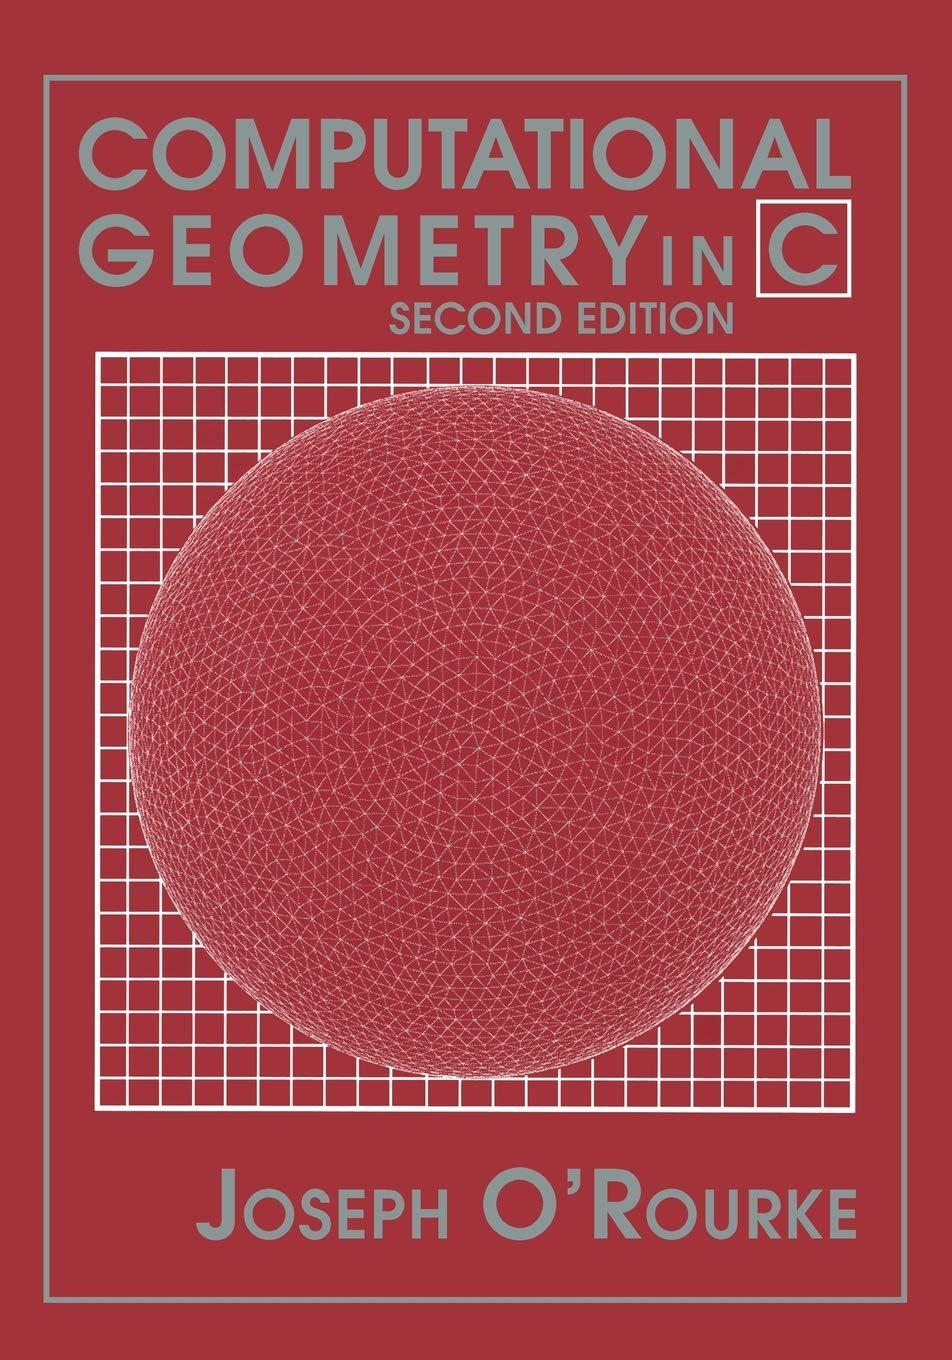 computational geometry in c 2nd edition joseph o'rourke 0521649765,978-0521649766